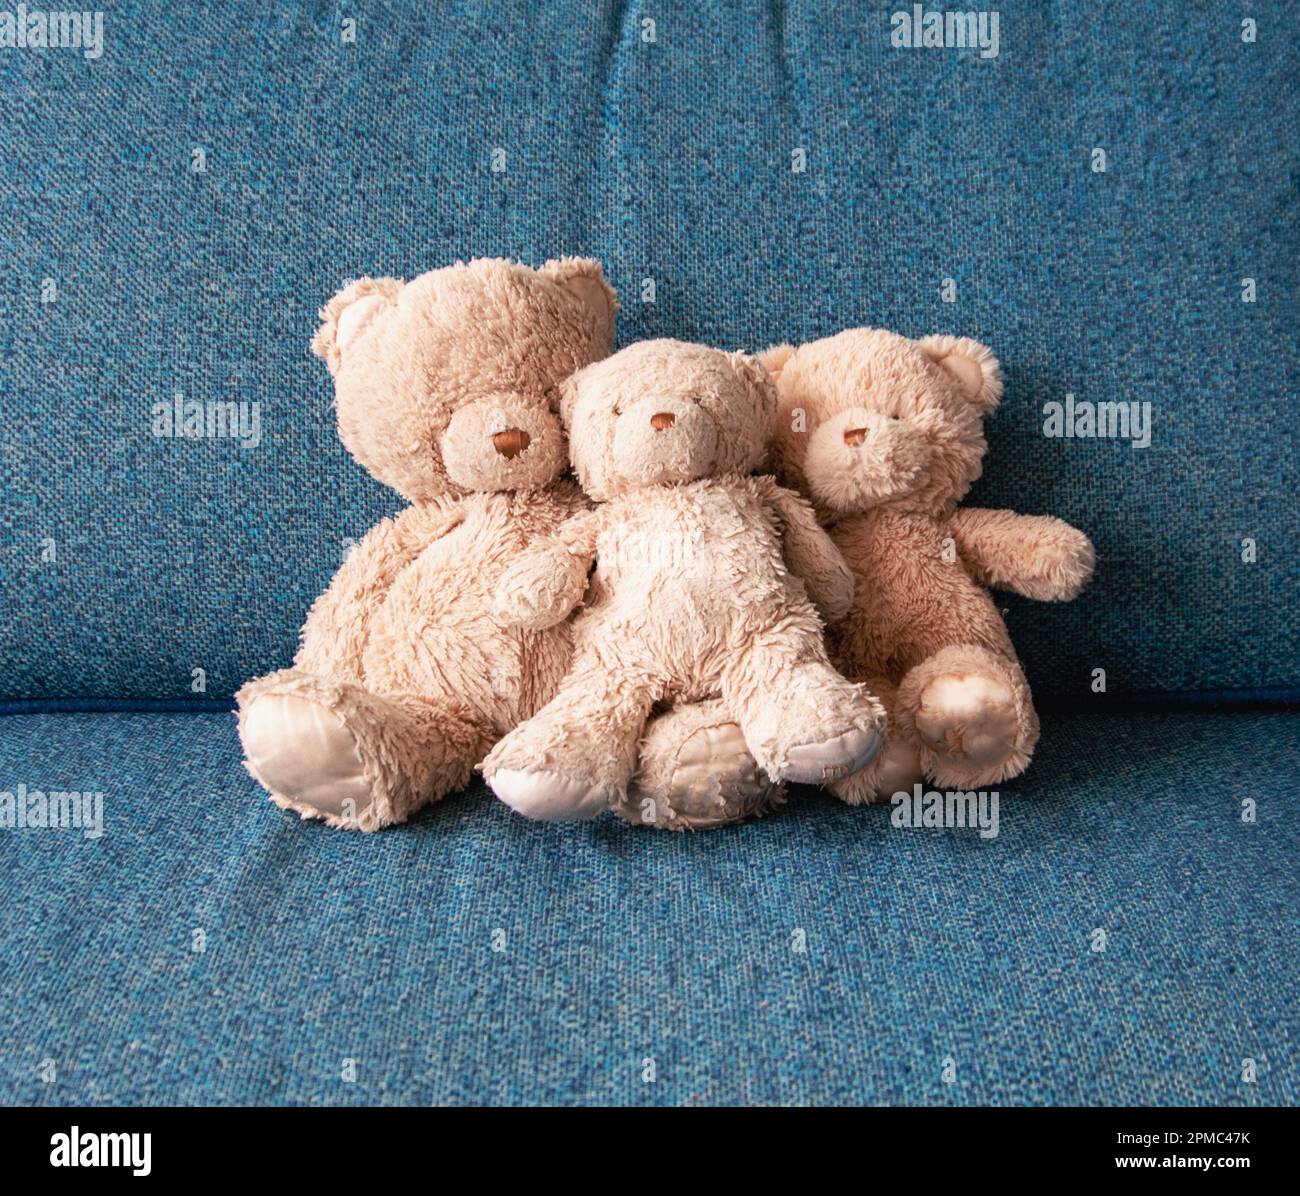 Tres osos de peluche muy queridos borrosos sentados en un sofá texturizado. Foto de stock